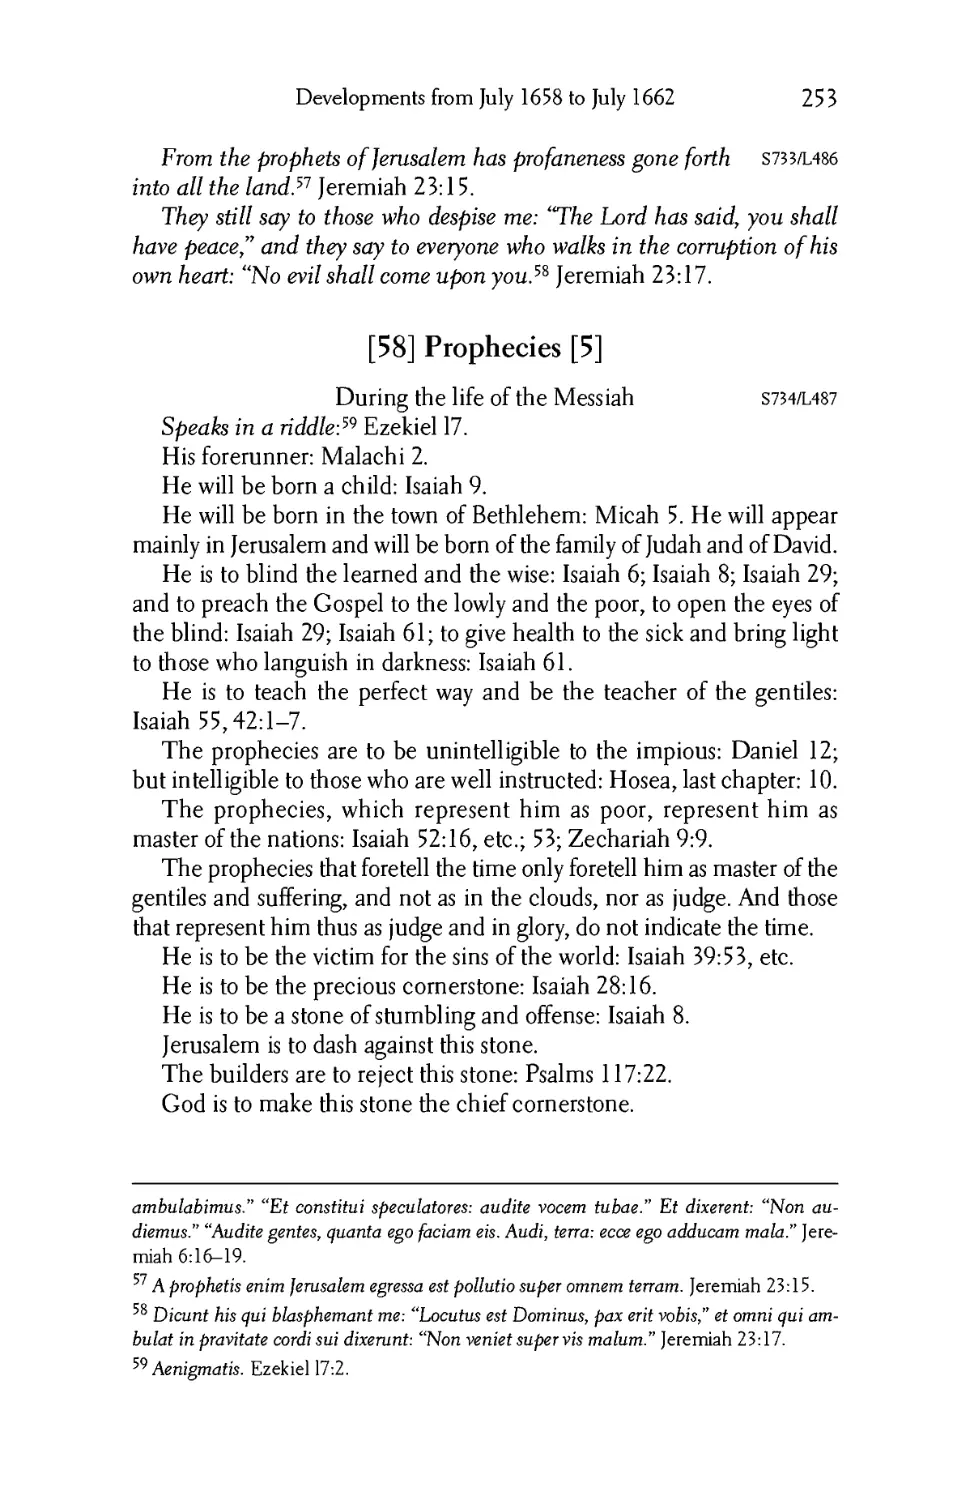 58. Prophecies 5